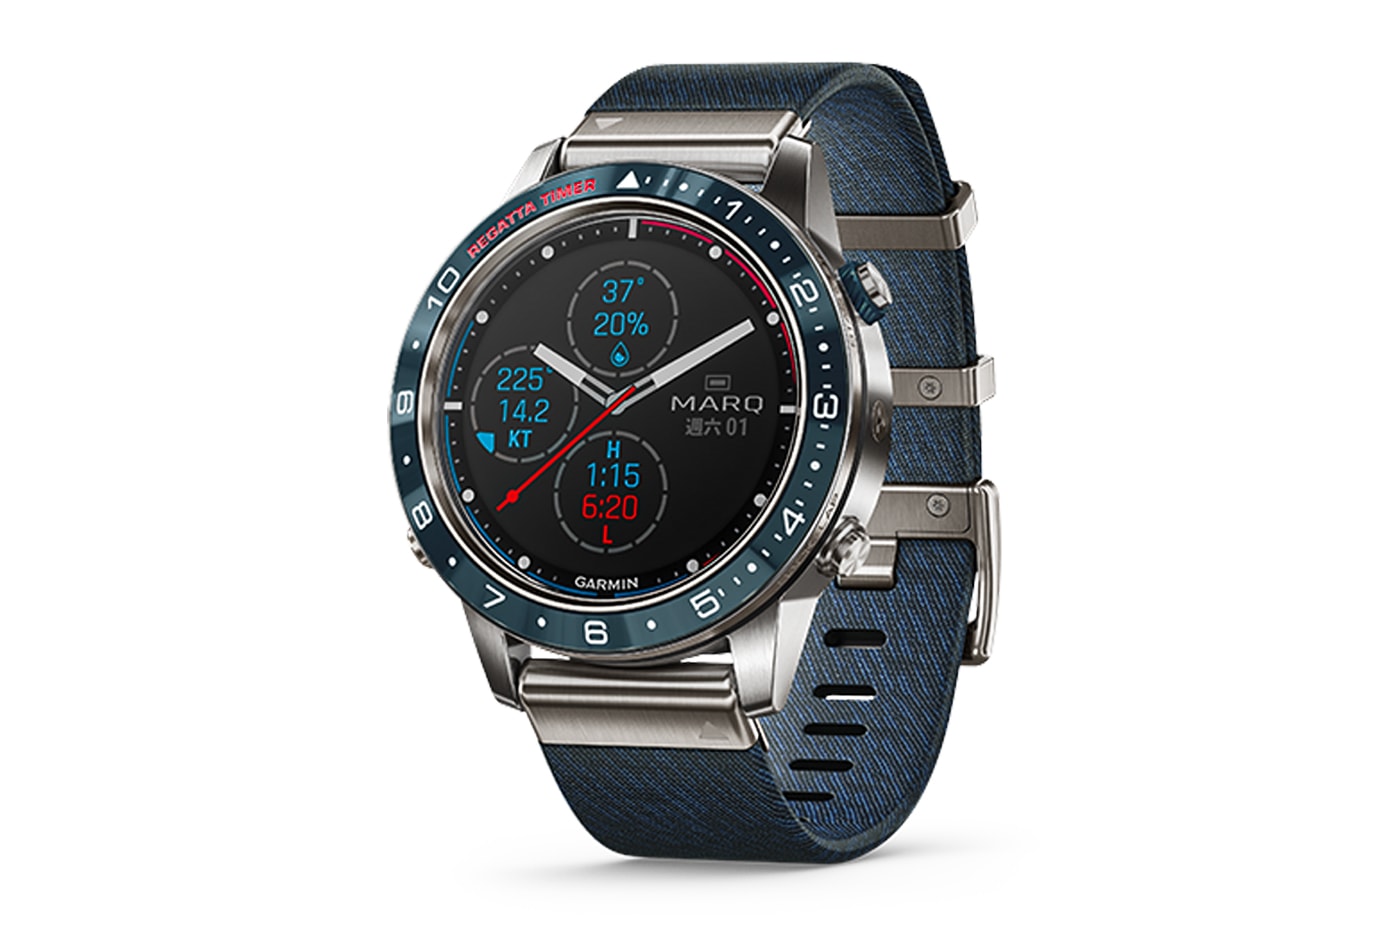 Garmin MARQ Watch Set Release smart watches Cliff Pemble